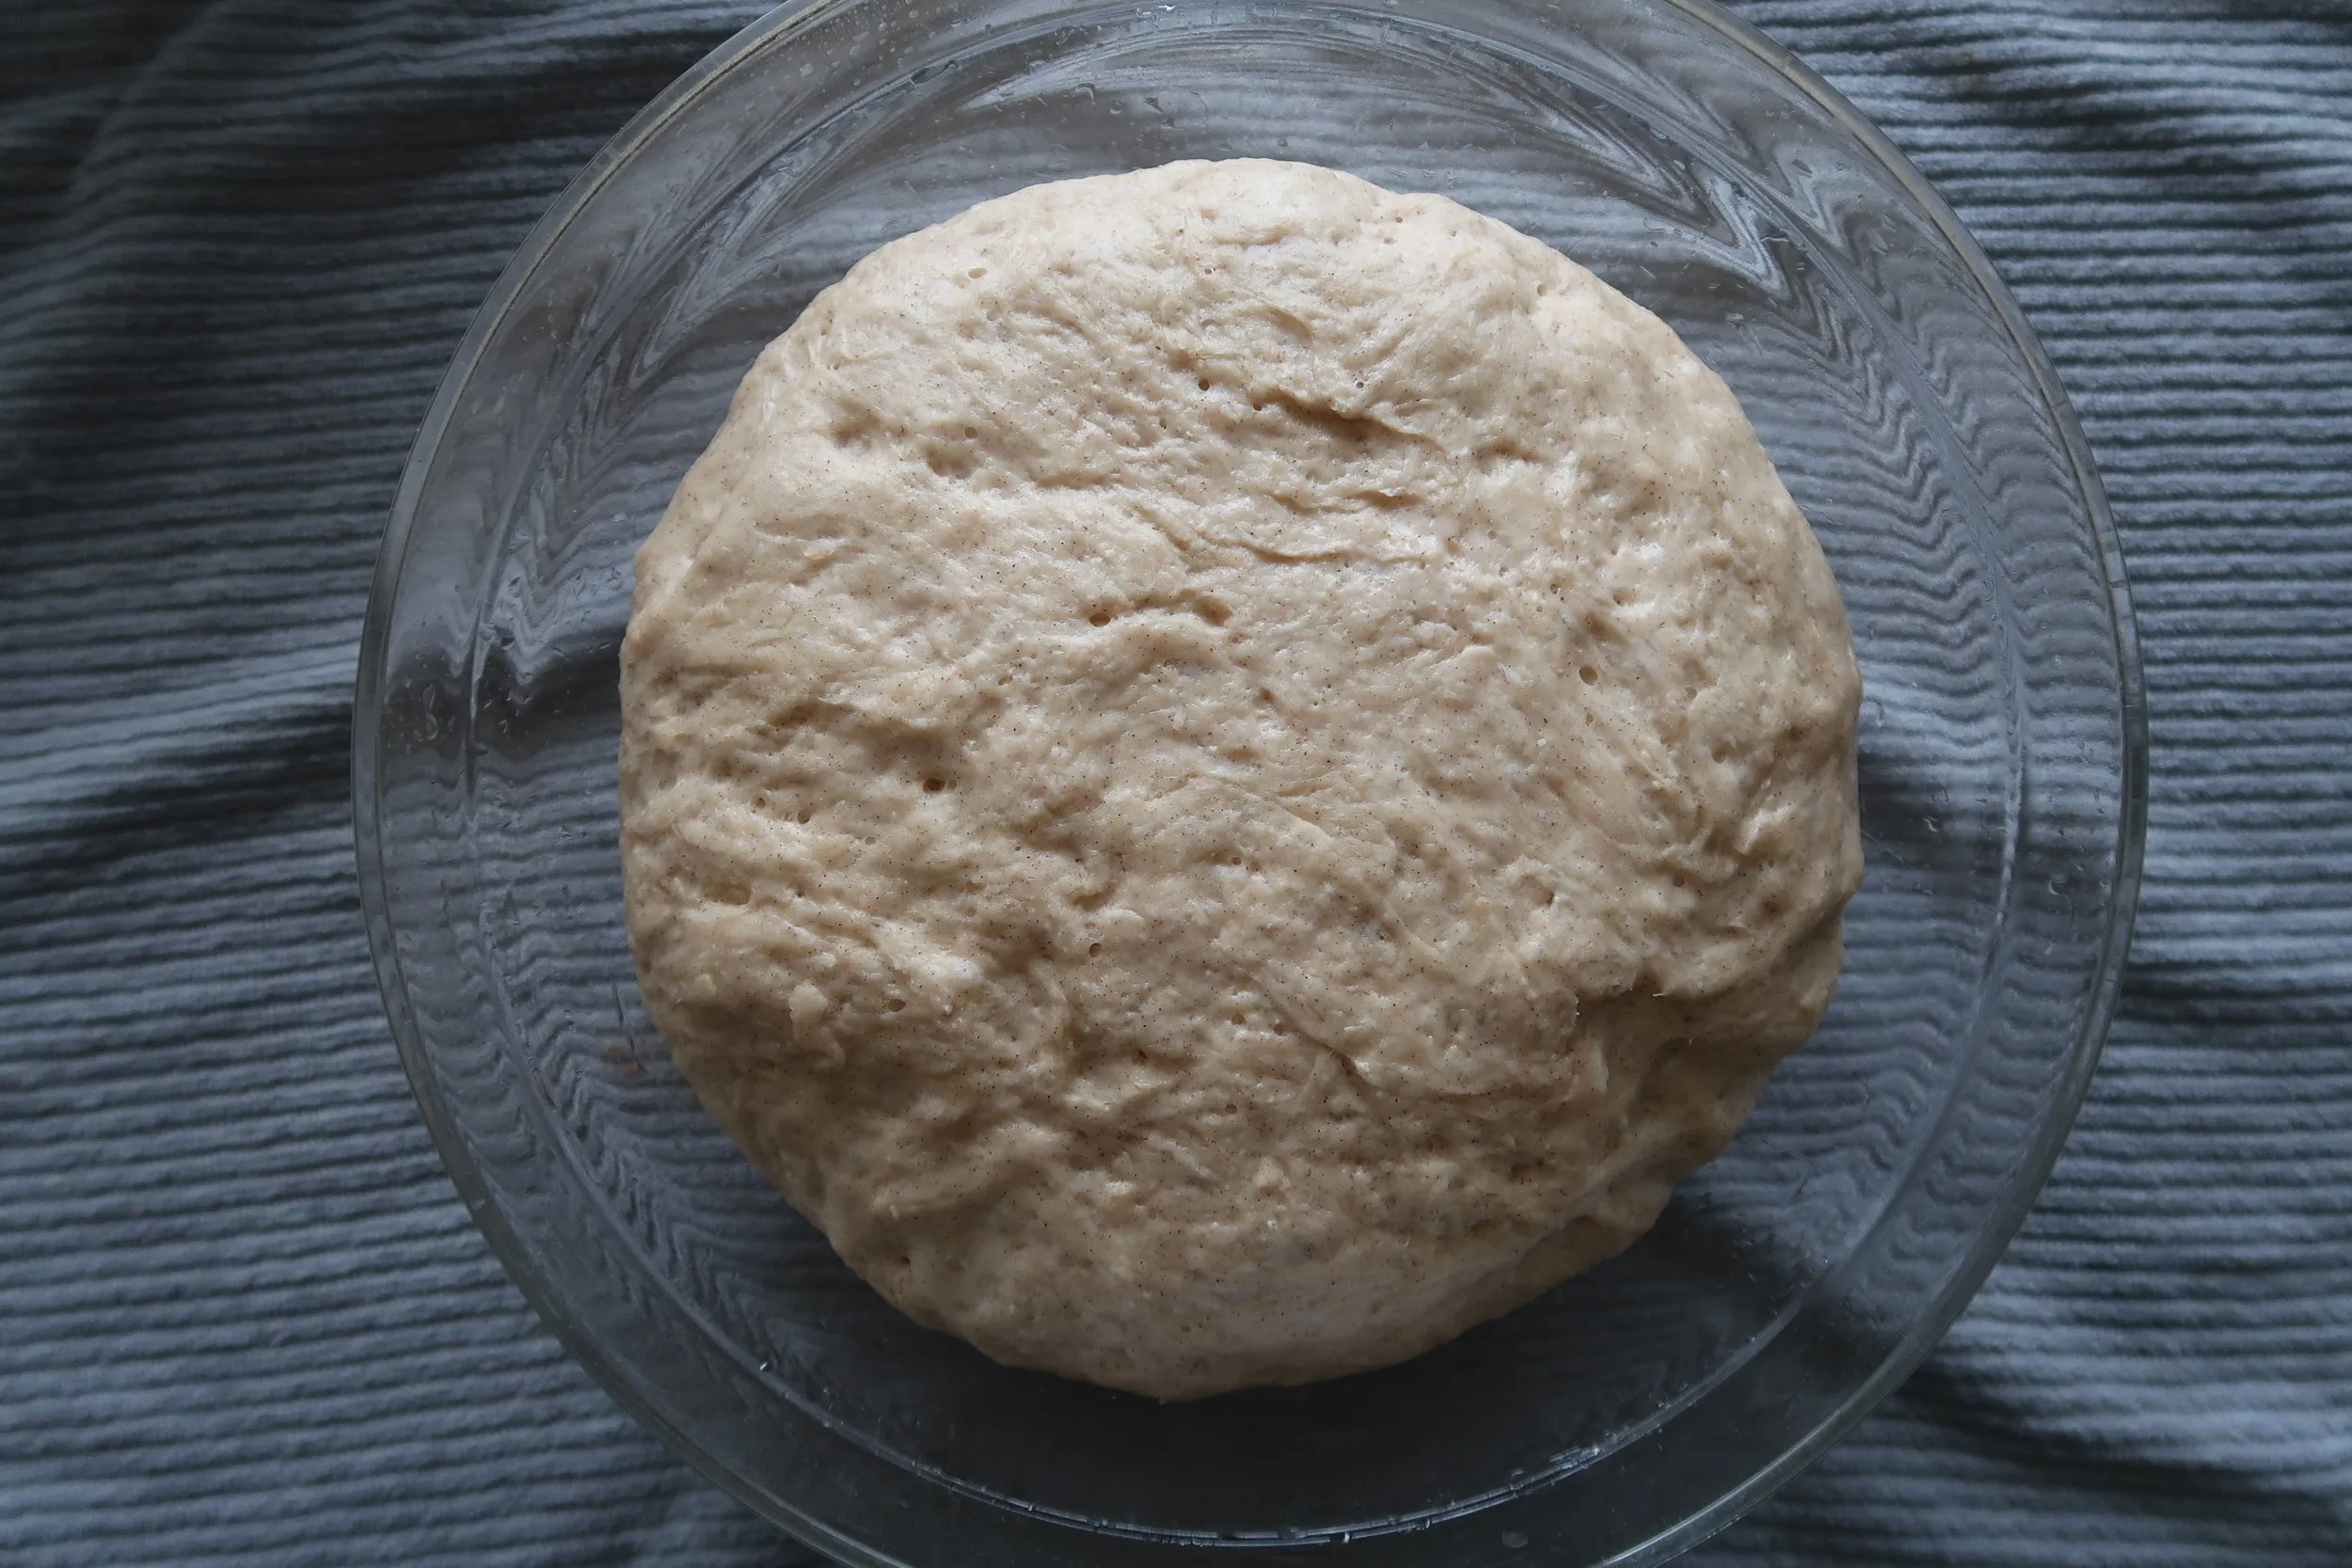 Proofed cinnamon roll dough.